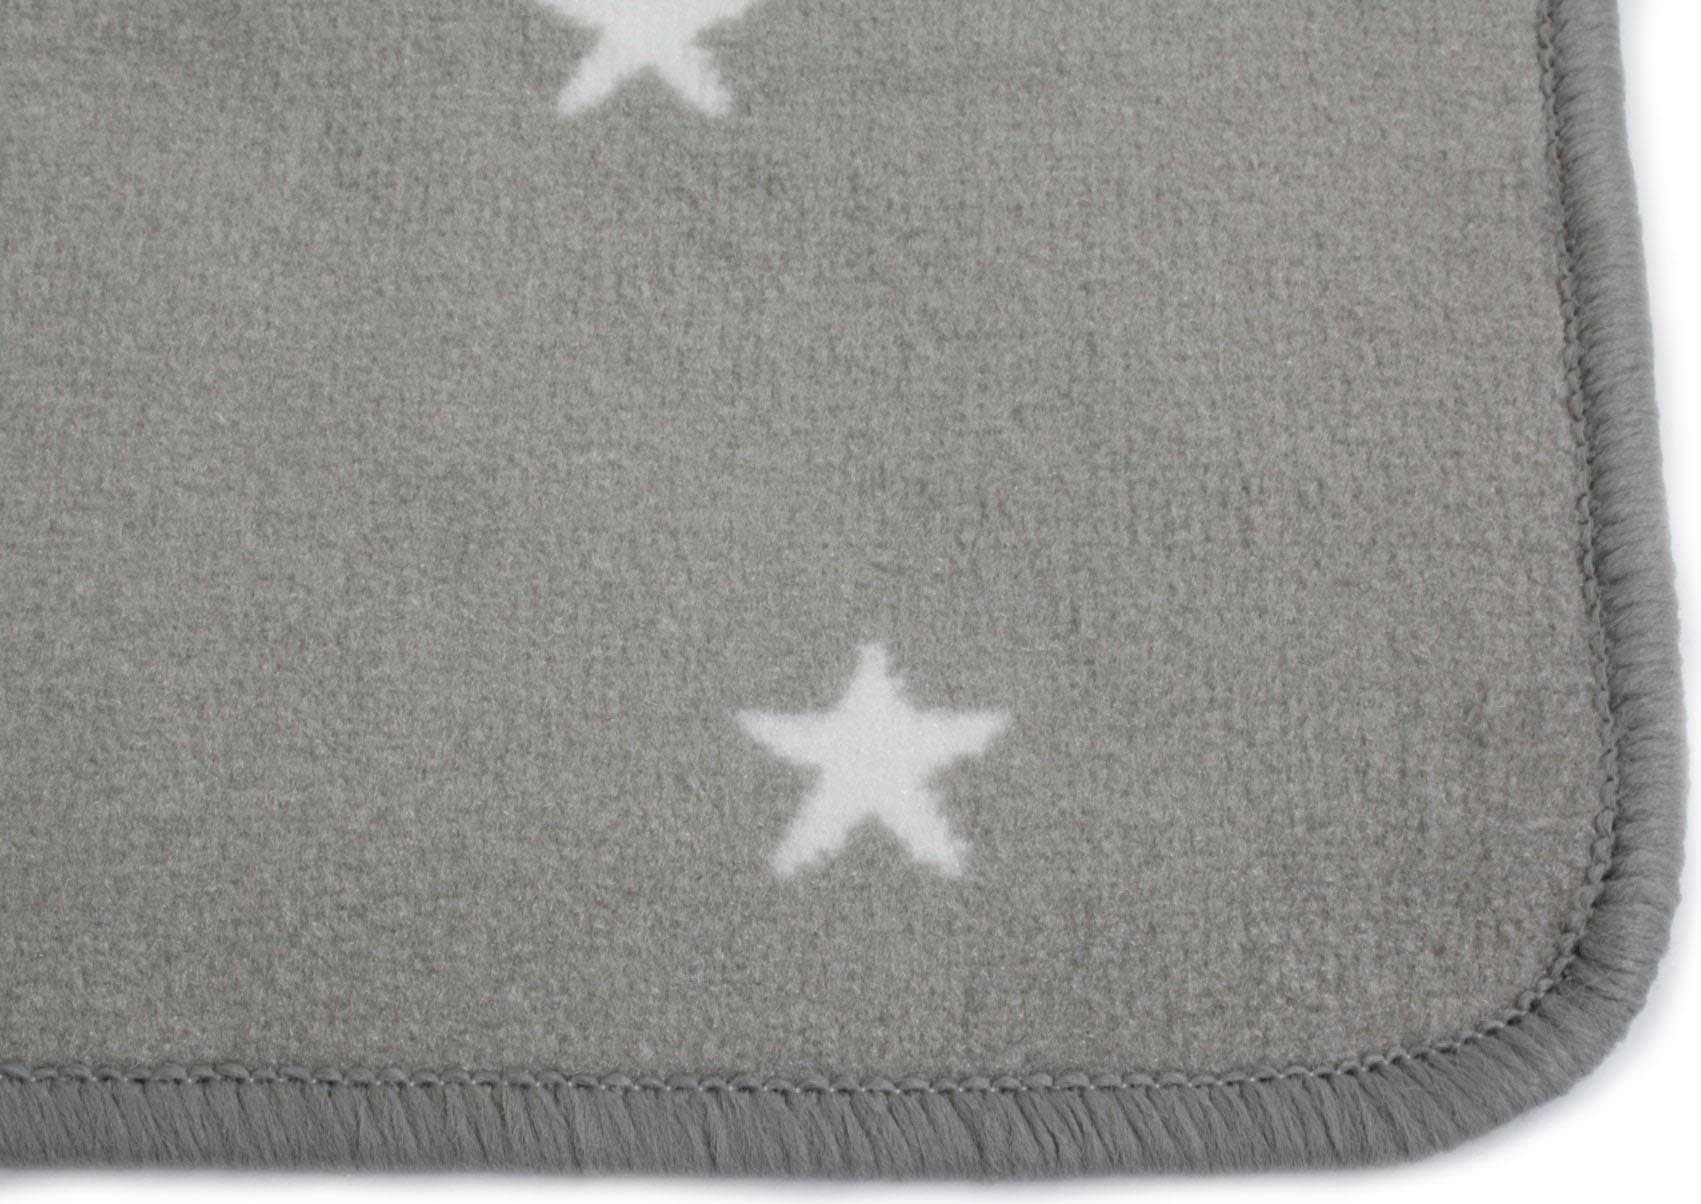 Primaflor-Ideen in Textil Kinderteppich »STELLA«, rechteckig, Motiv Sterne, Kinderzimmer